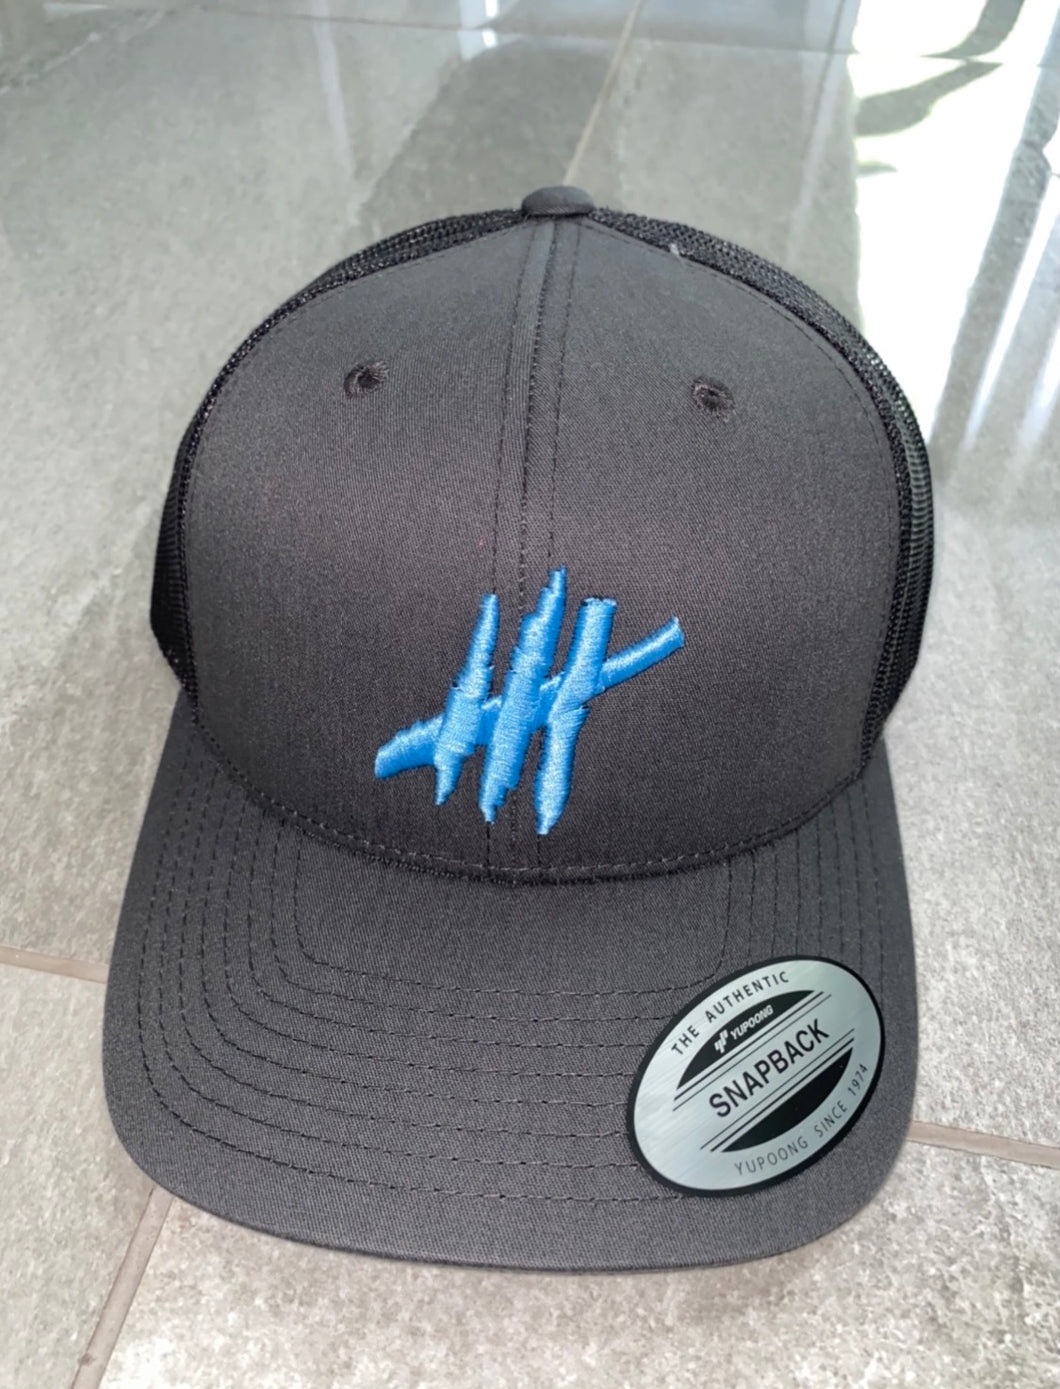 Dark grey trucker cap with light blue logo